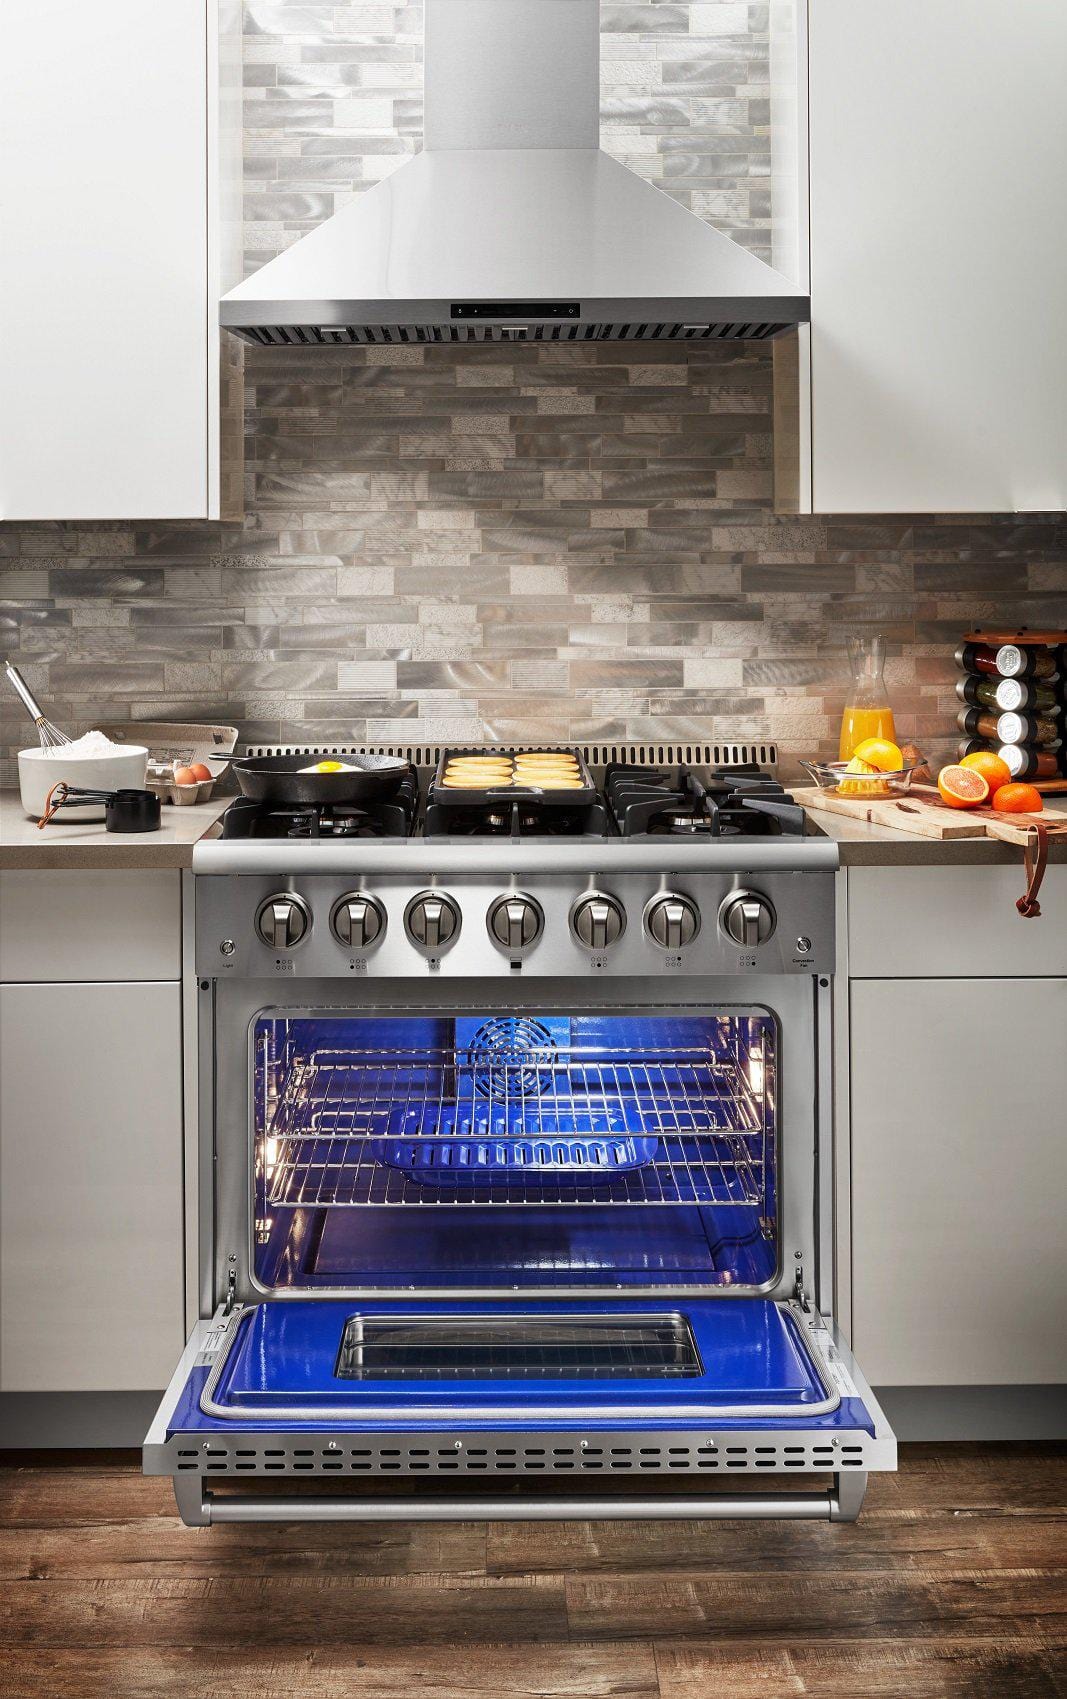 Thor Kitchen 36 in. Professional Natural Gas Range in Stainless Steel HRG3618U Ranges HRG3618U Luxury Appliances Direct